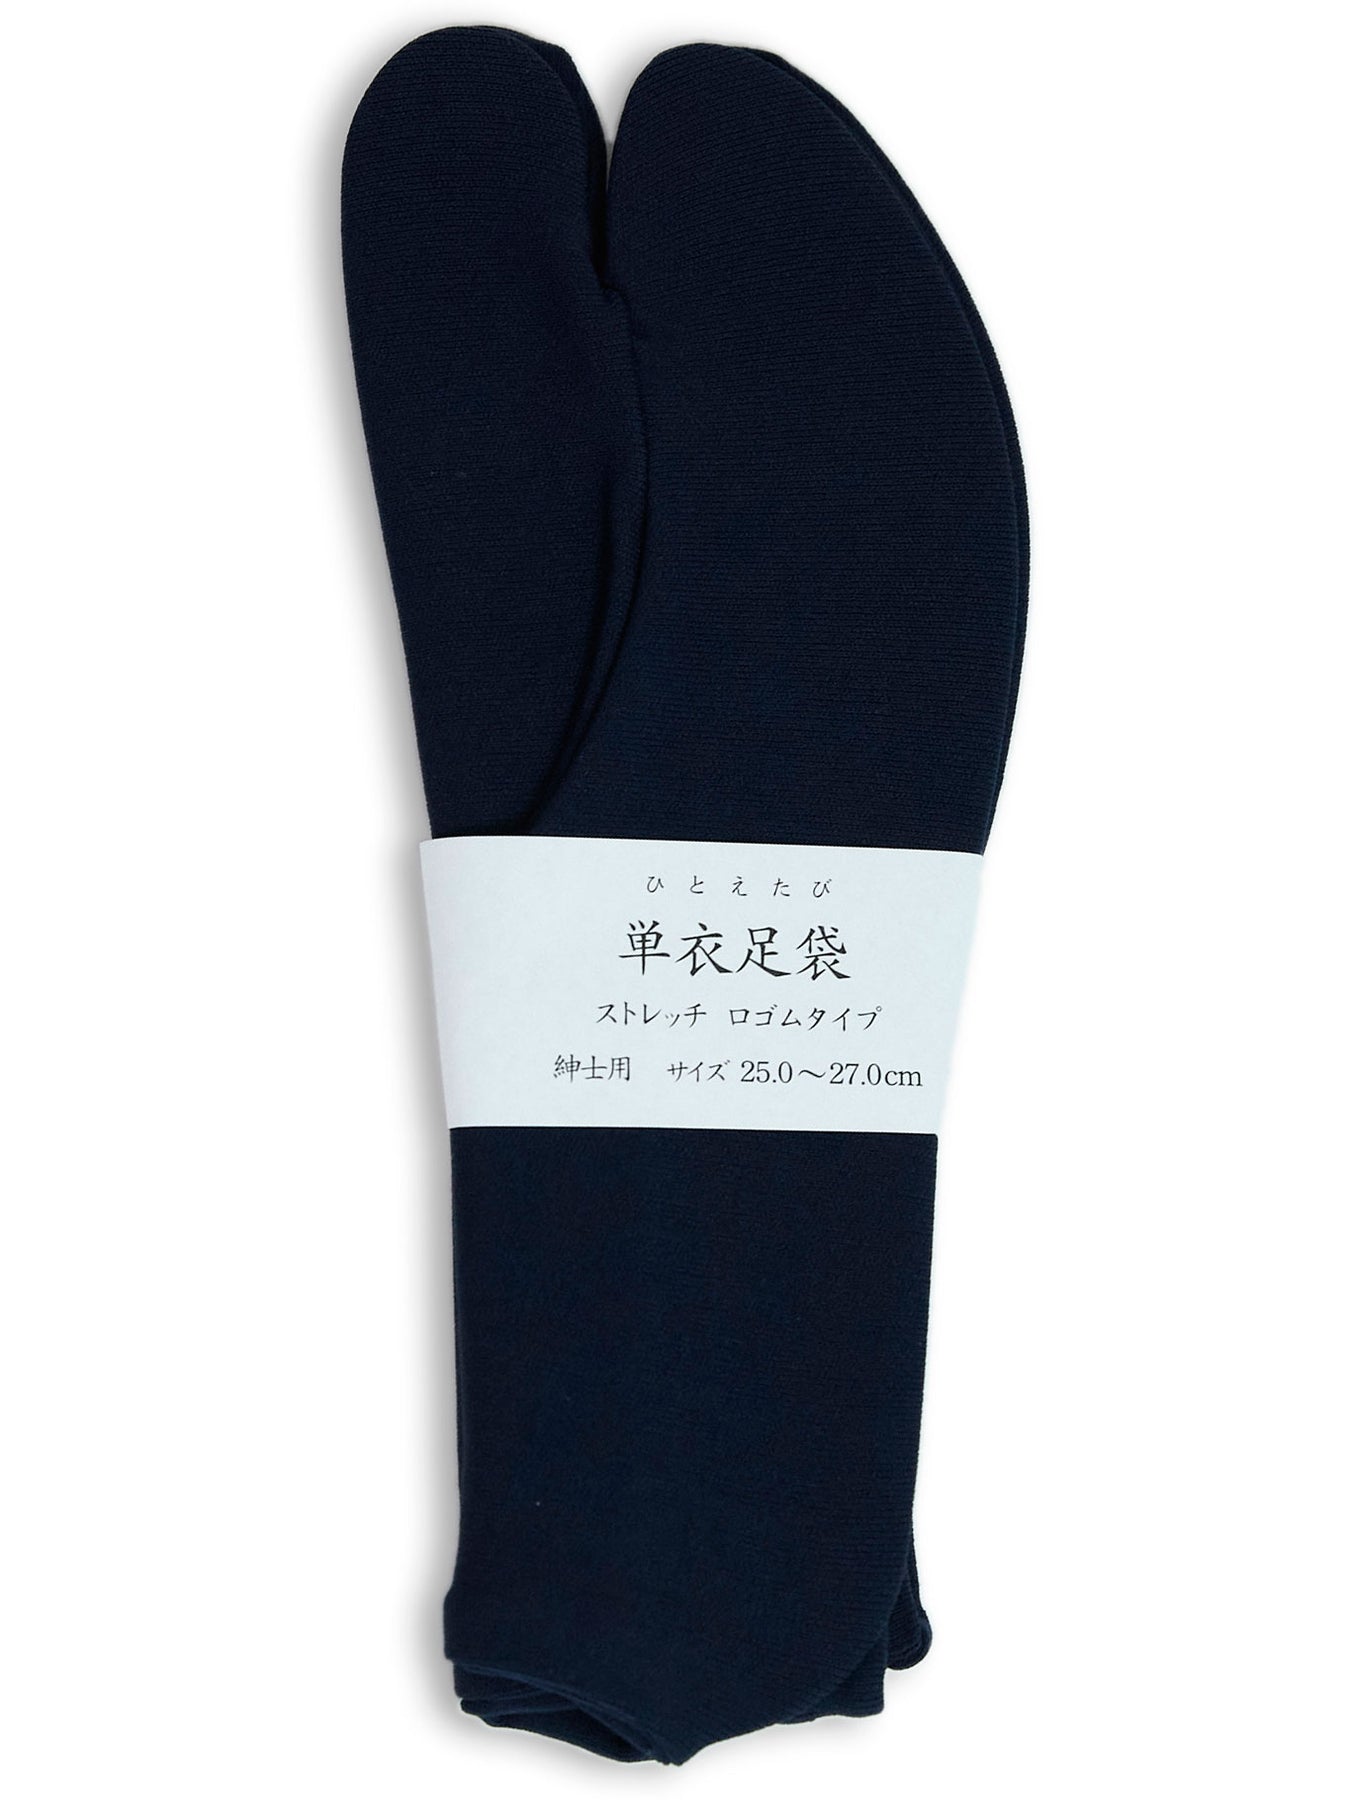 Japanese Men's Tabi Socks | Japan Objects Store